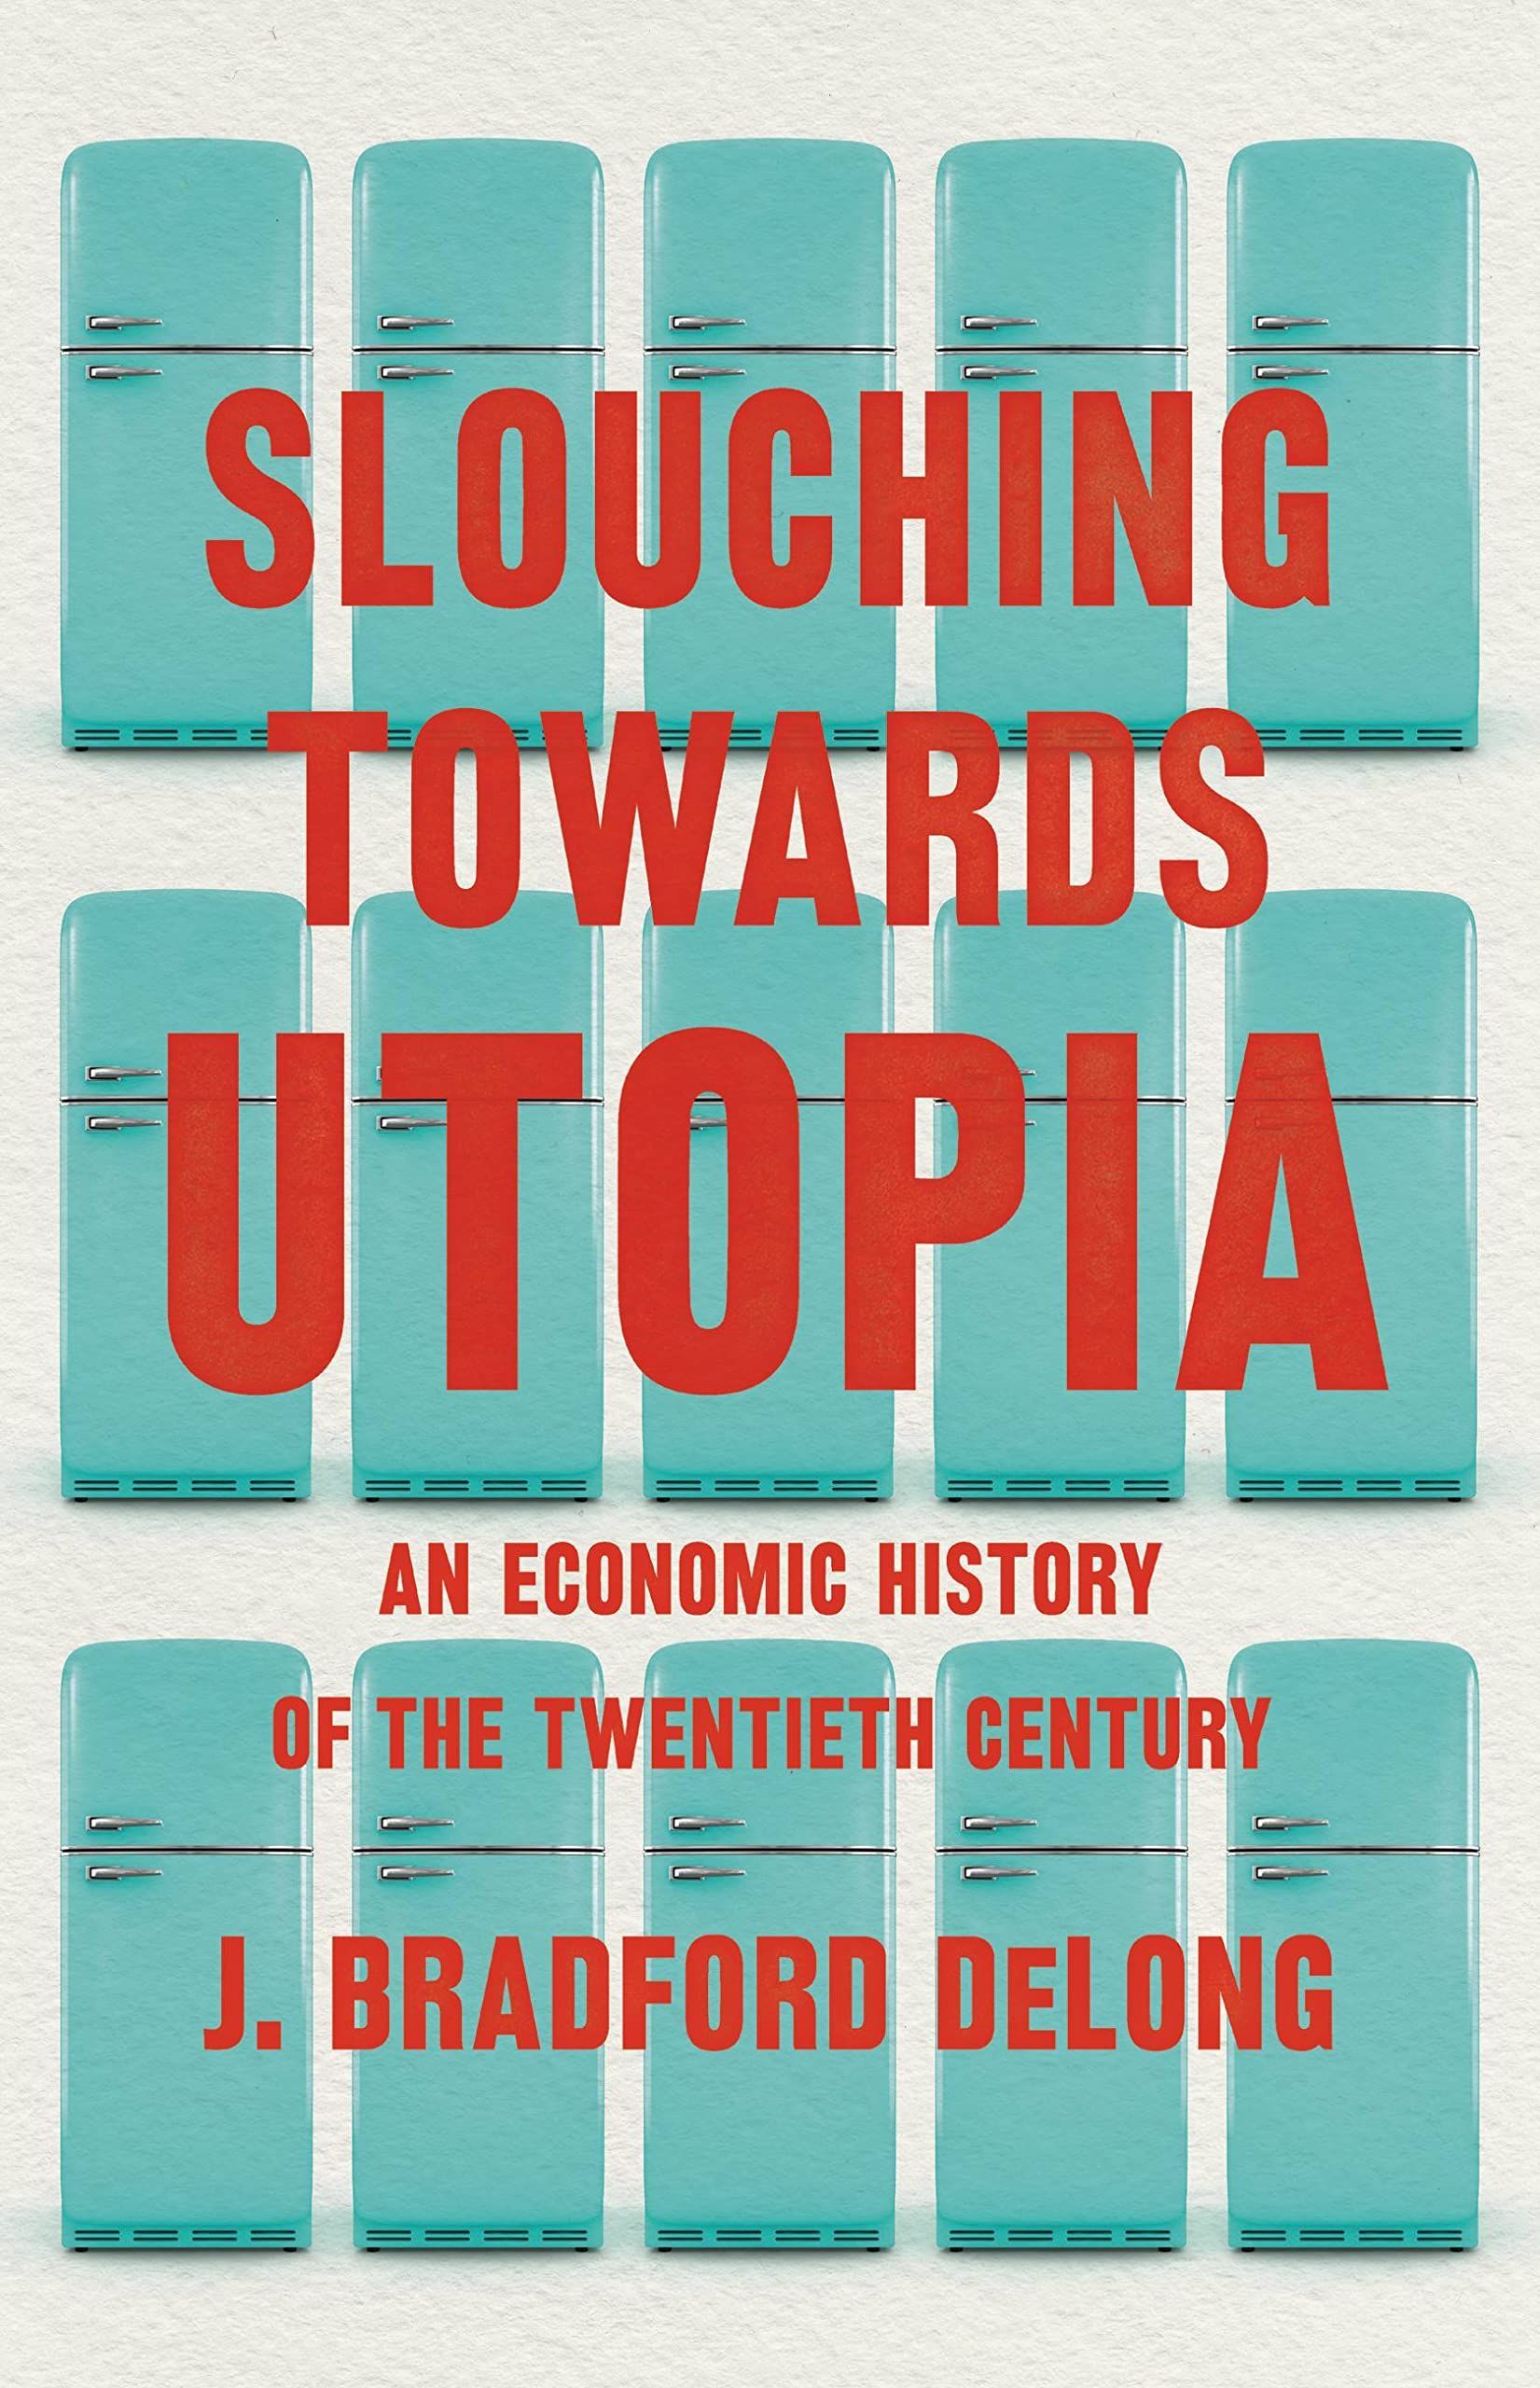 The Professional Utopians: On J. Bradford DeLong’s “Slouching Towards Utopia”